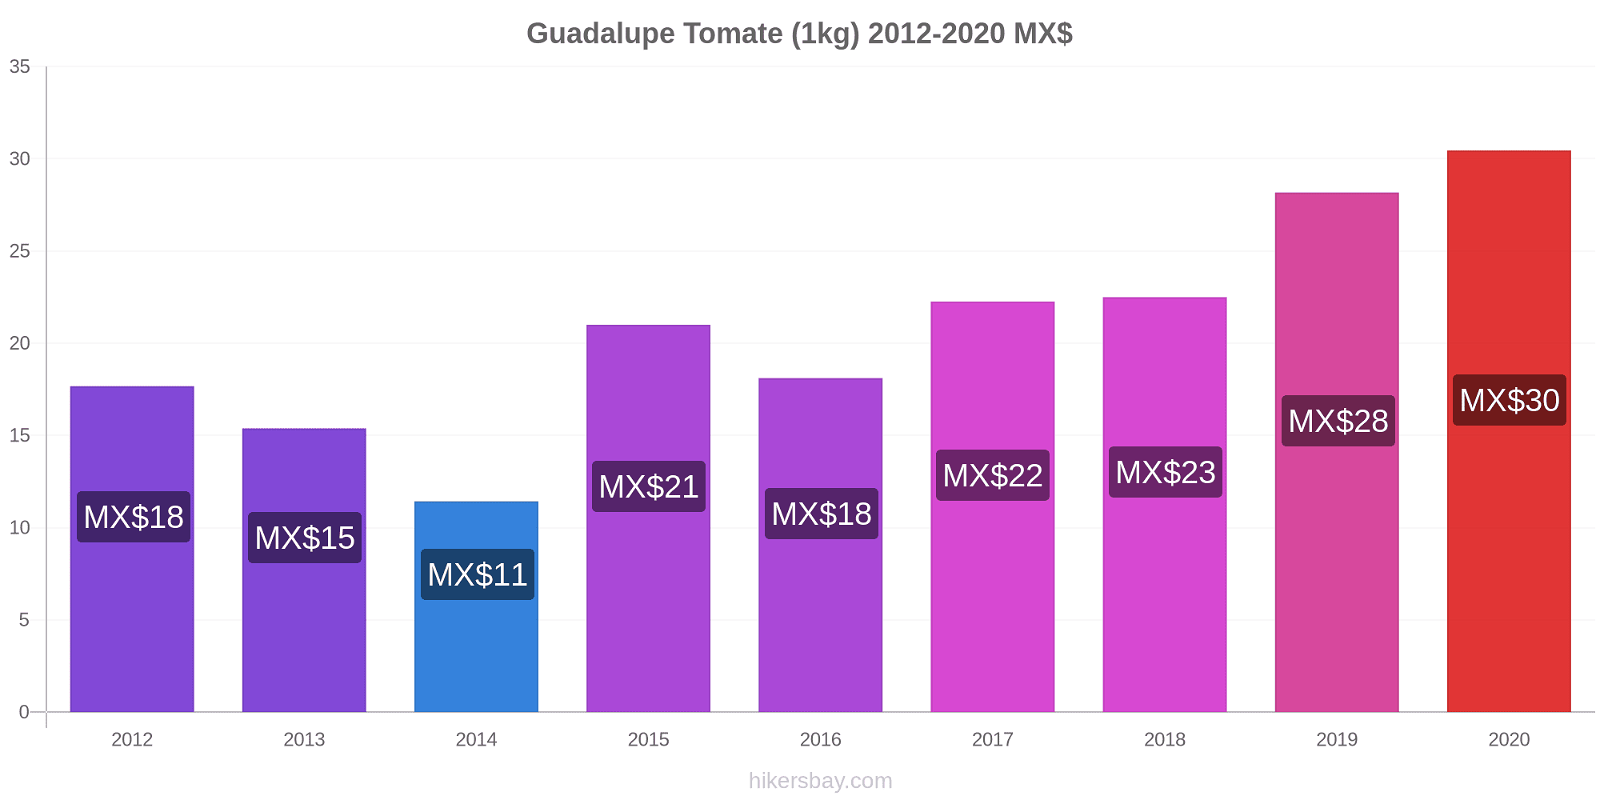 Guadalupe changements de prix Tomate (1kg) hikersbay.com